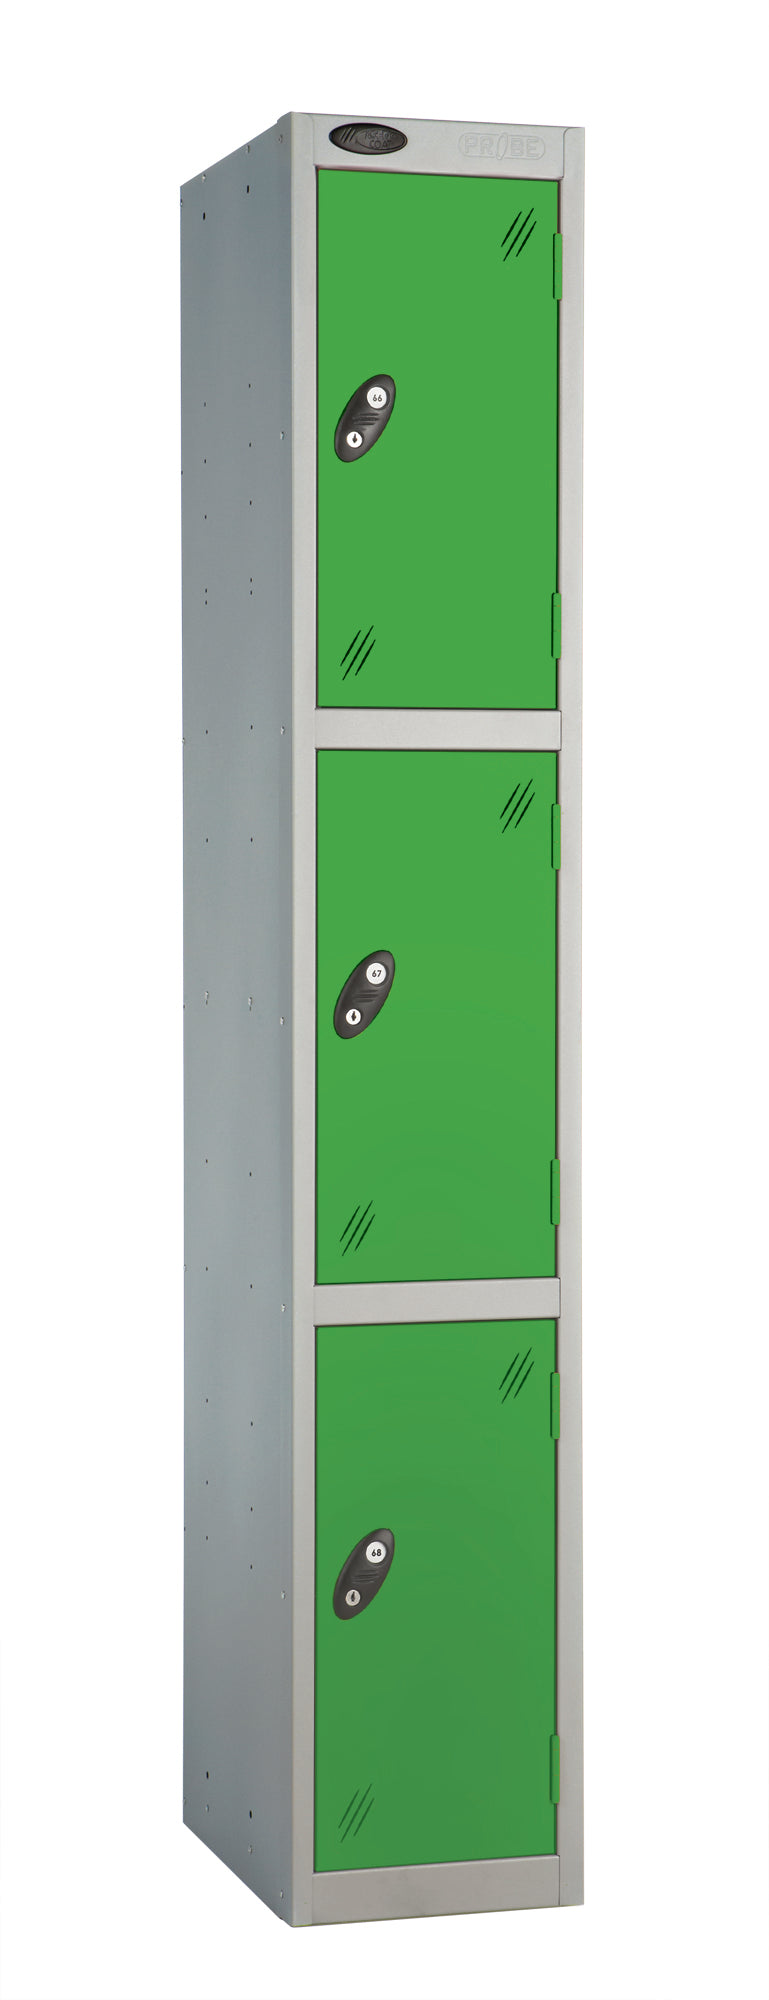 PROBEBOX STANDARD 1 NEST STEEL LOCKERS - FOREST GREEN 3 DOOR Storage Lockers > Lockers > Cabinets > Storage > Probe > One Stop For Safety   